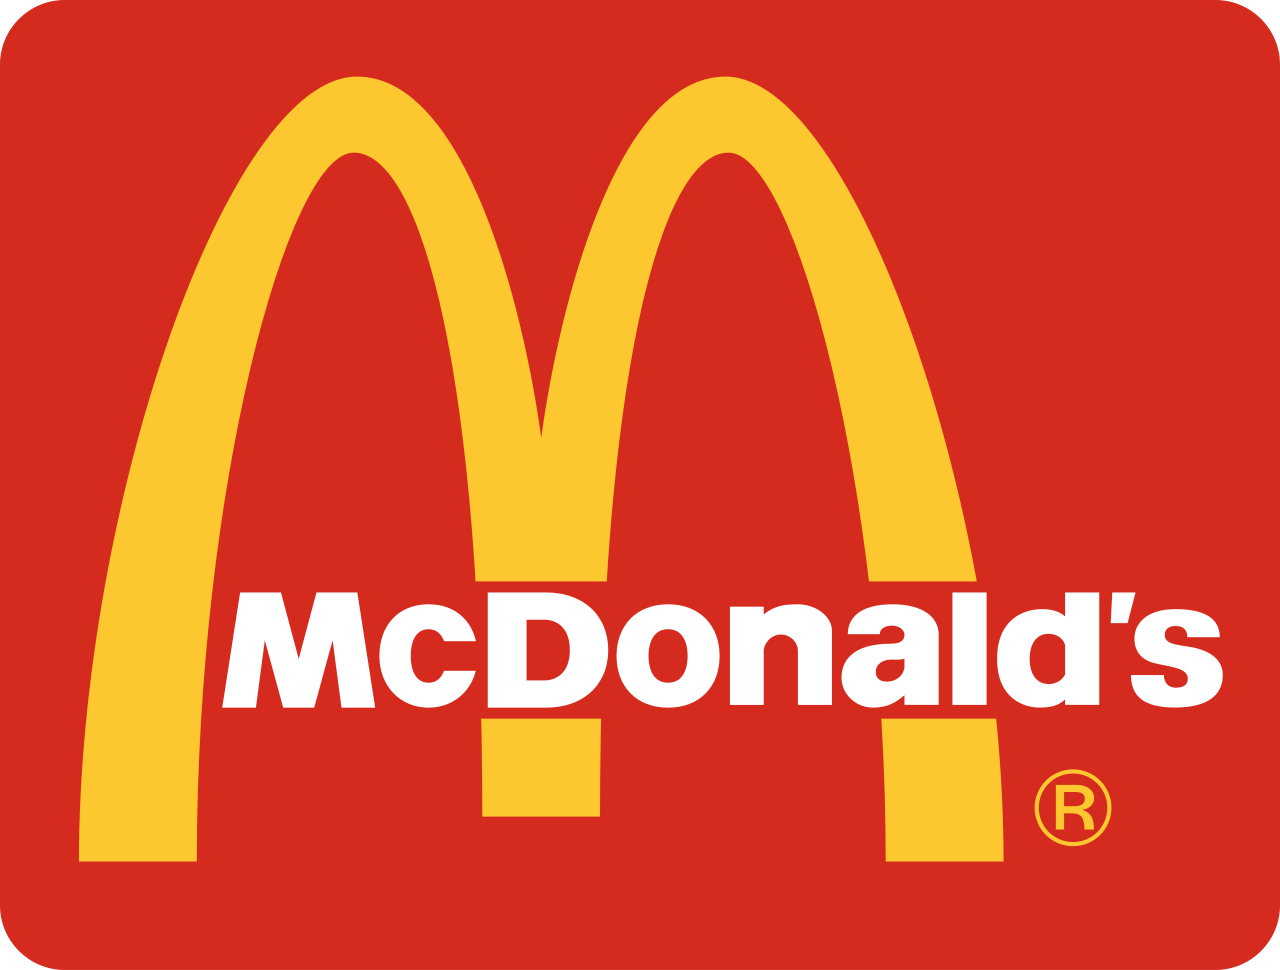 High Res Logo - McDonald's logo PNG image free download